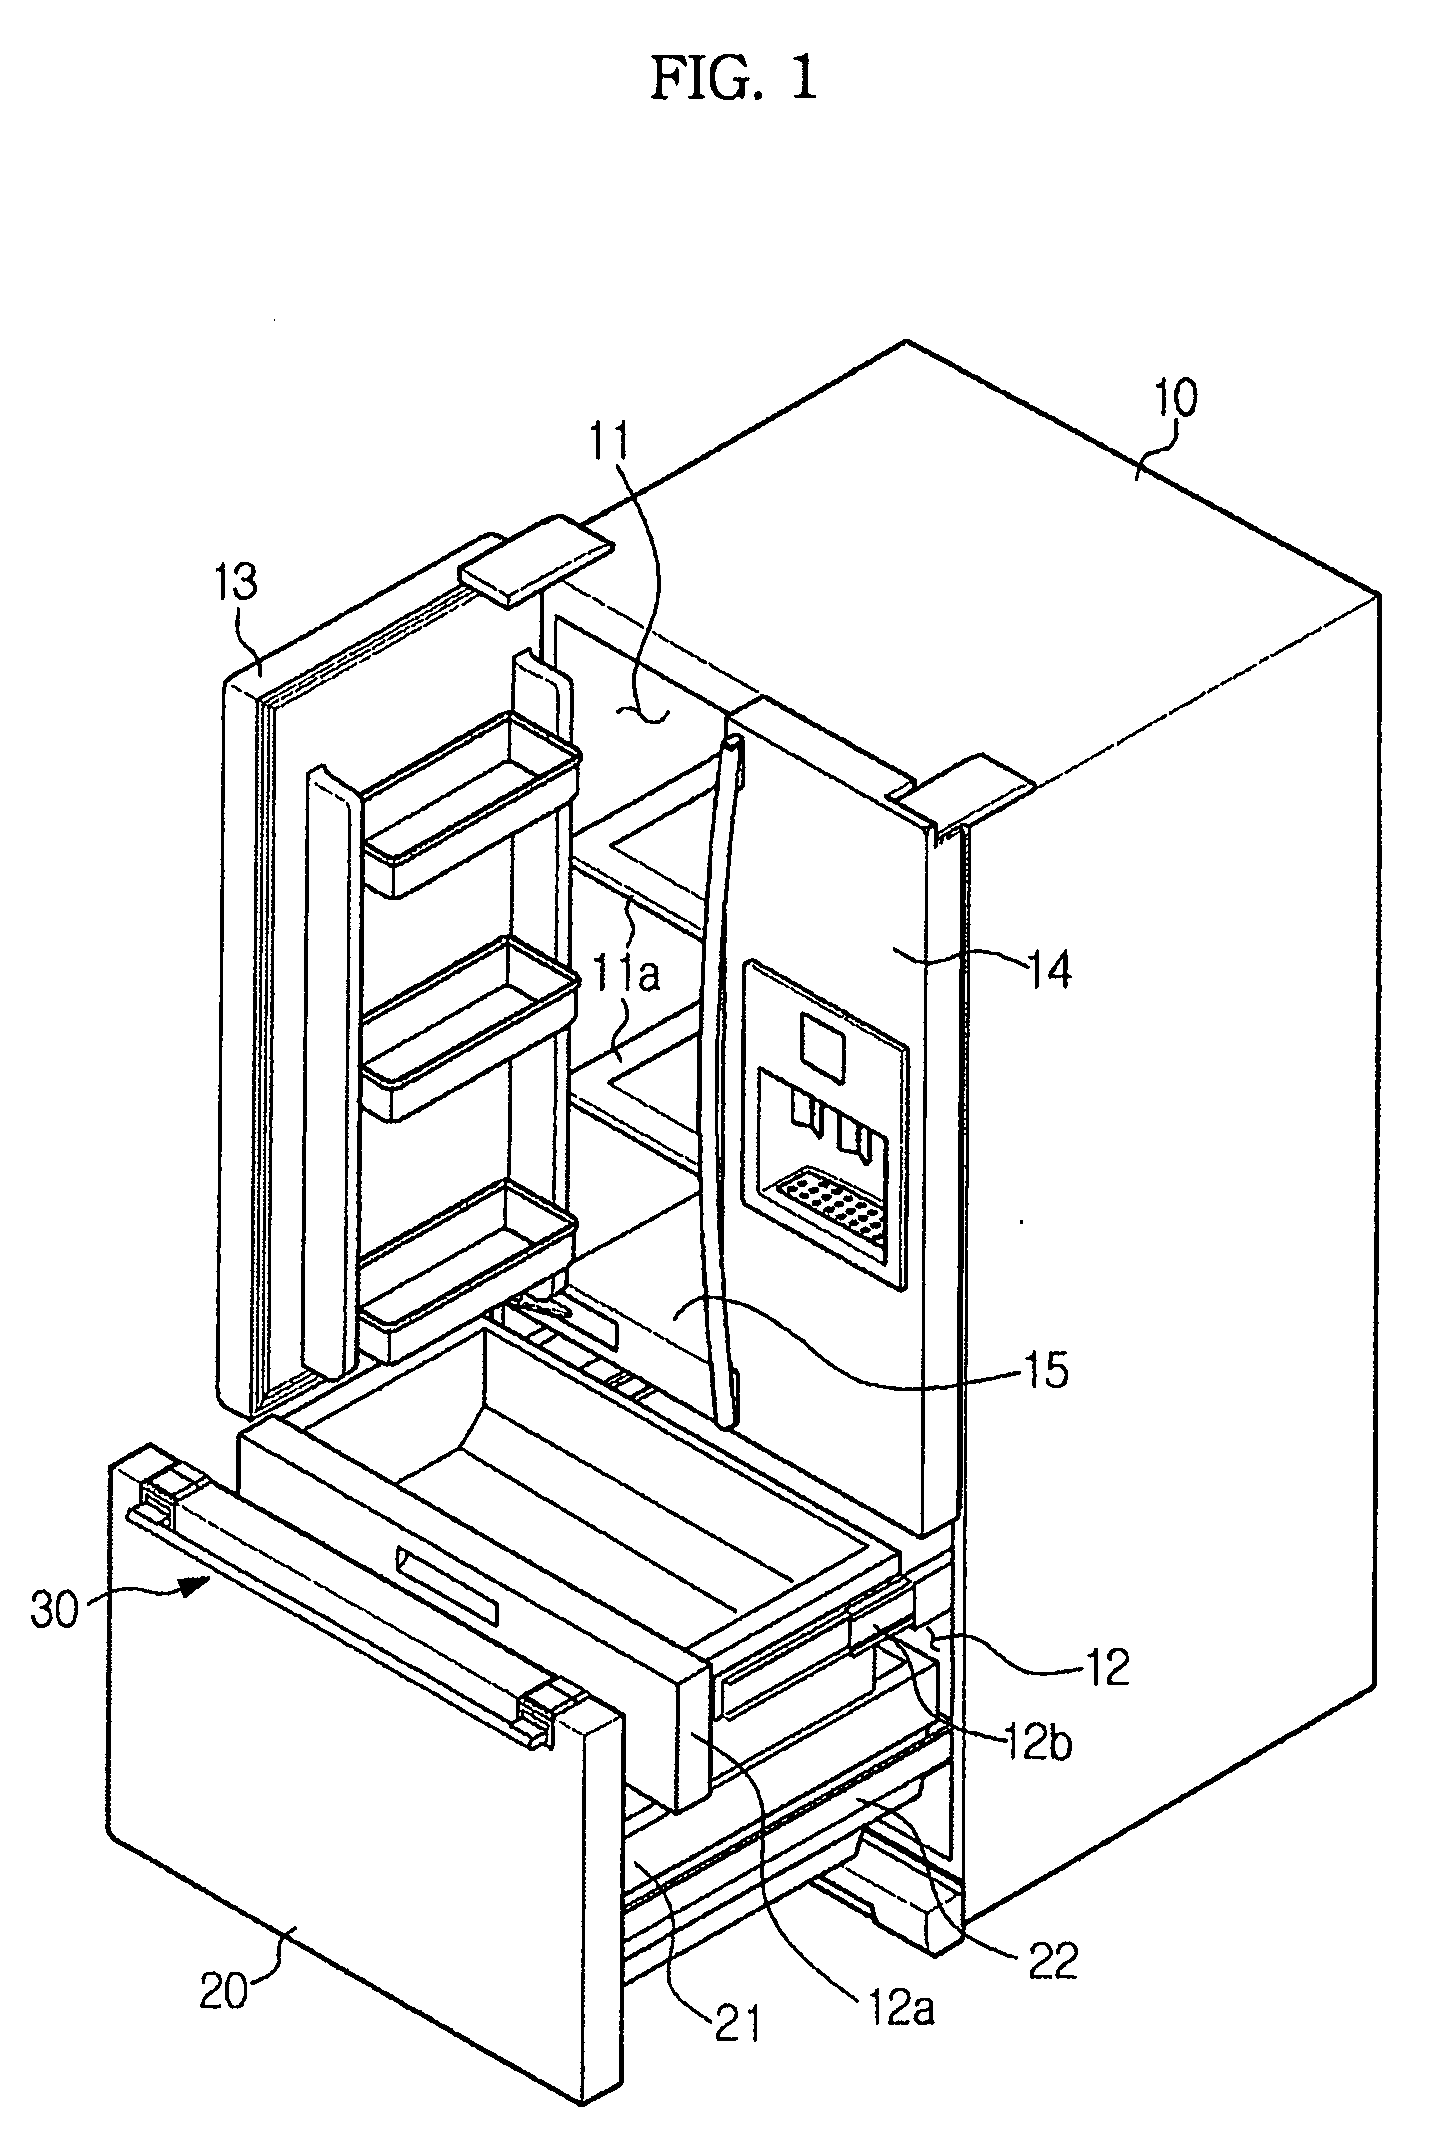 Refrigerator with door opening device